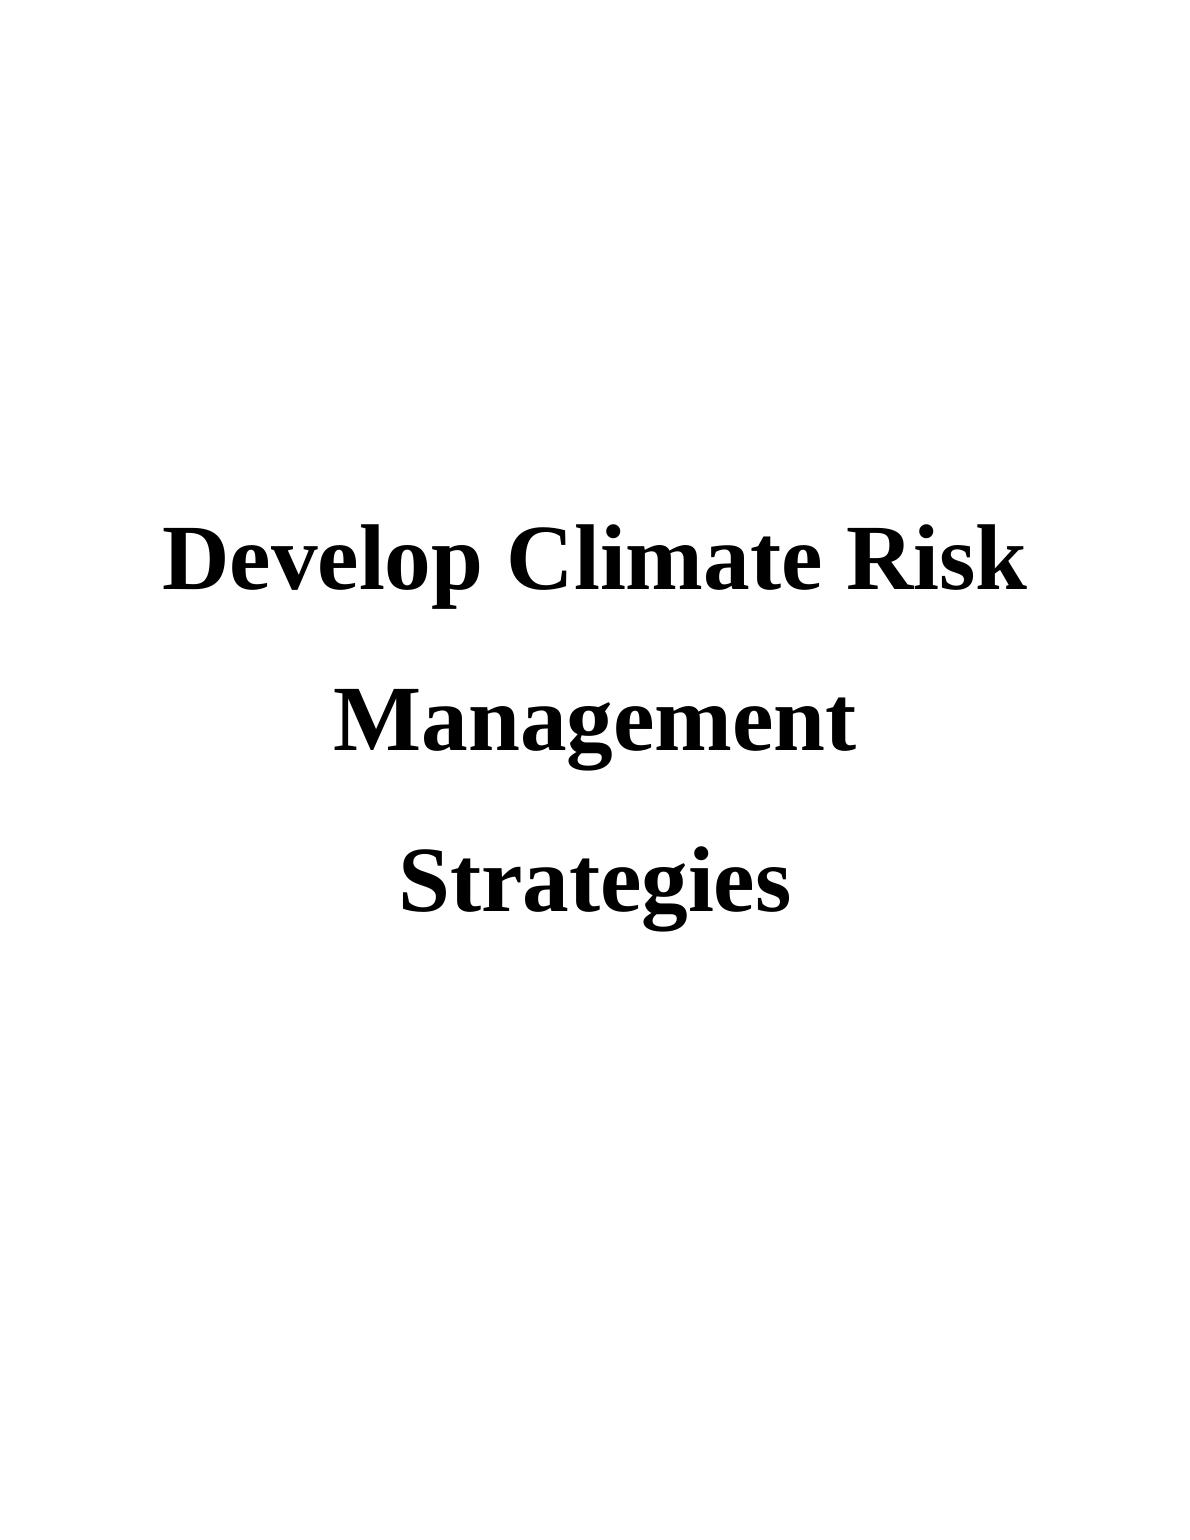 Develop Climate Risk Management Strategies_1